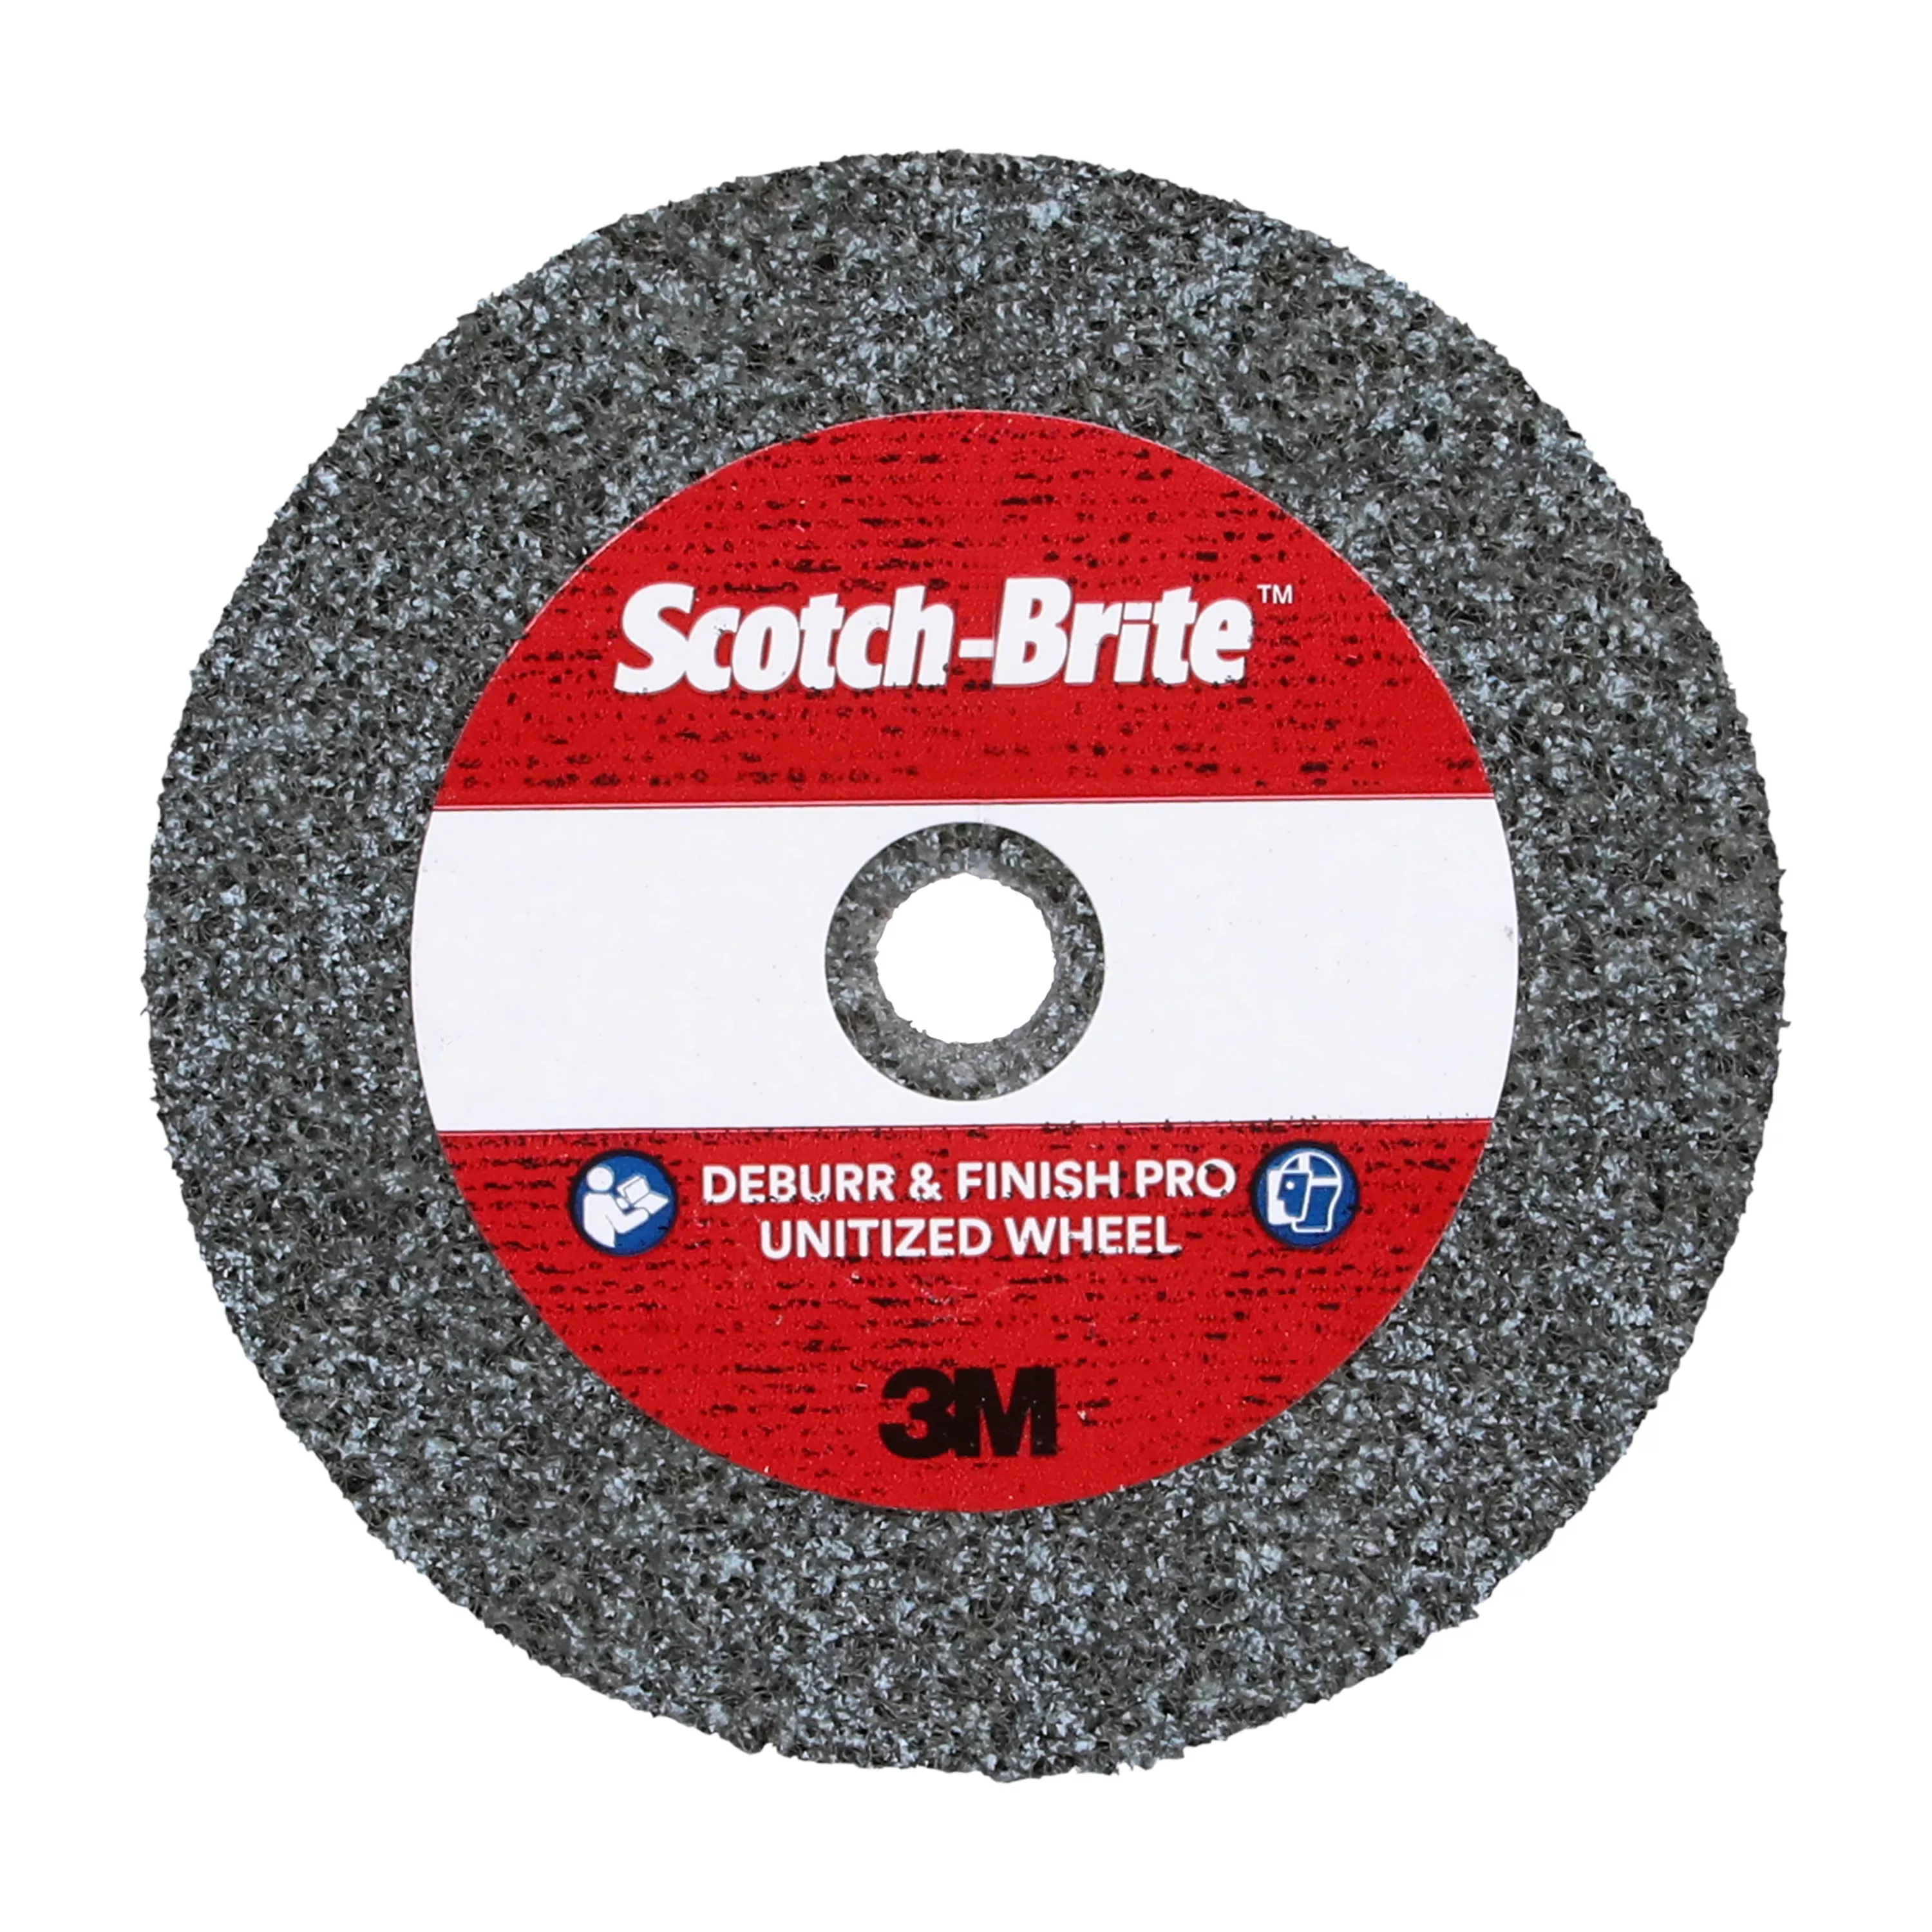 SKU 7100228755 | Scotch-Brite™ Deburr & Finish Pro Unitized Wheel